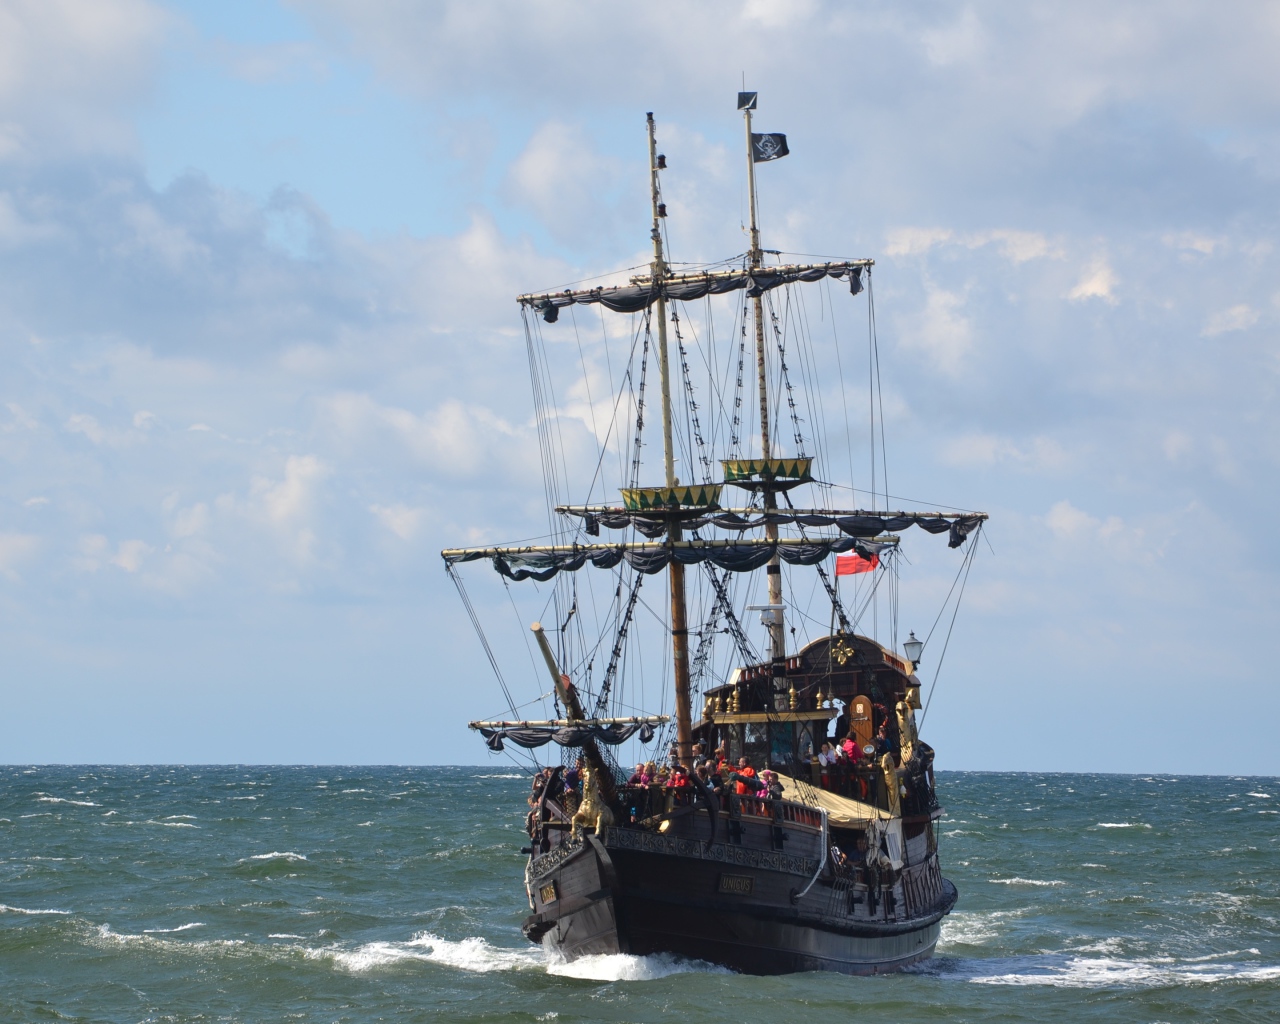 Big black pirate ship at sea